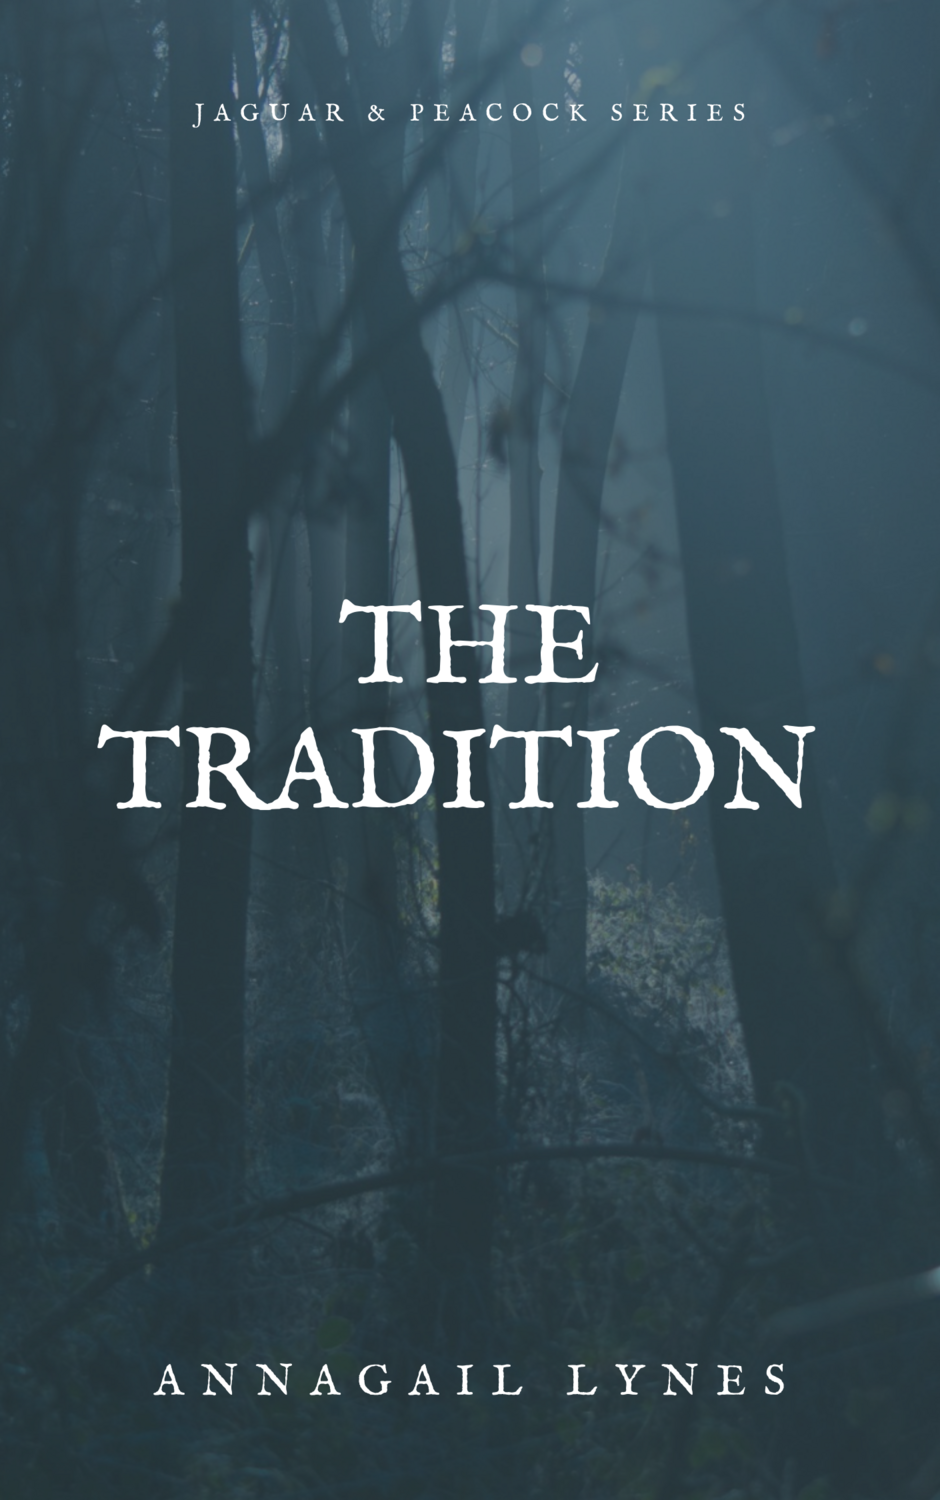 The Tradition E-Novel (Novel 10 In The Jaguar & Peacock Series)